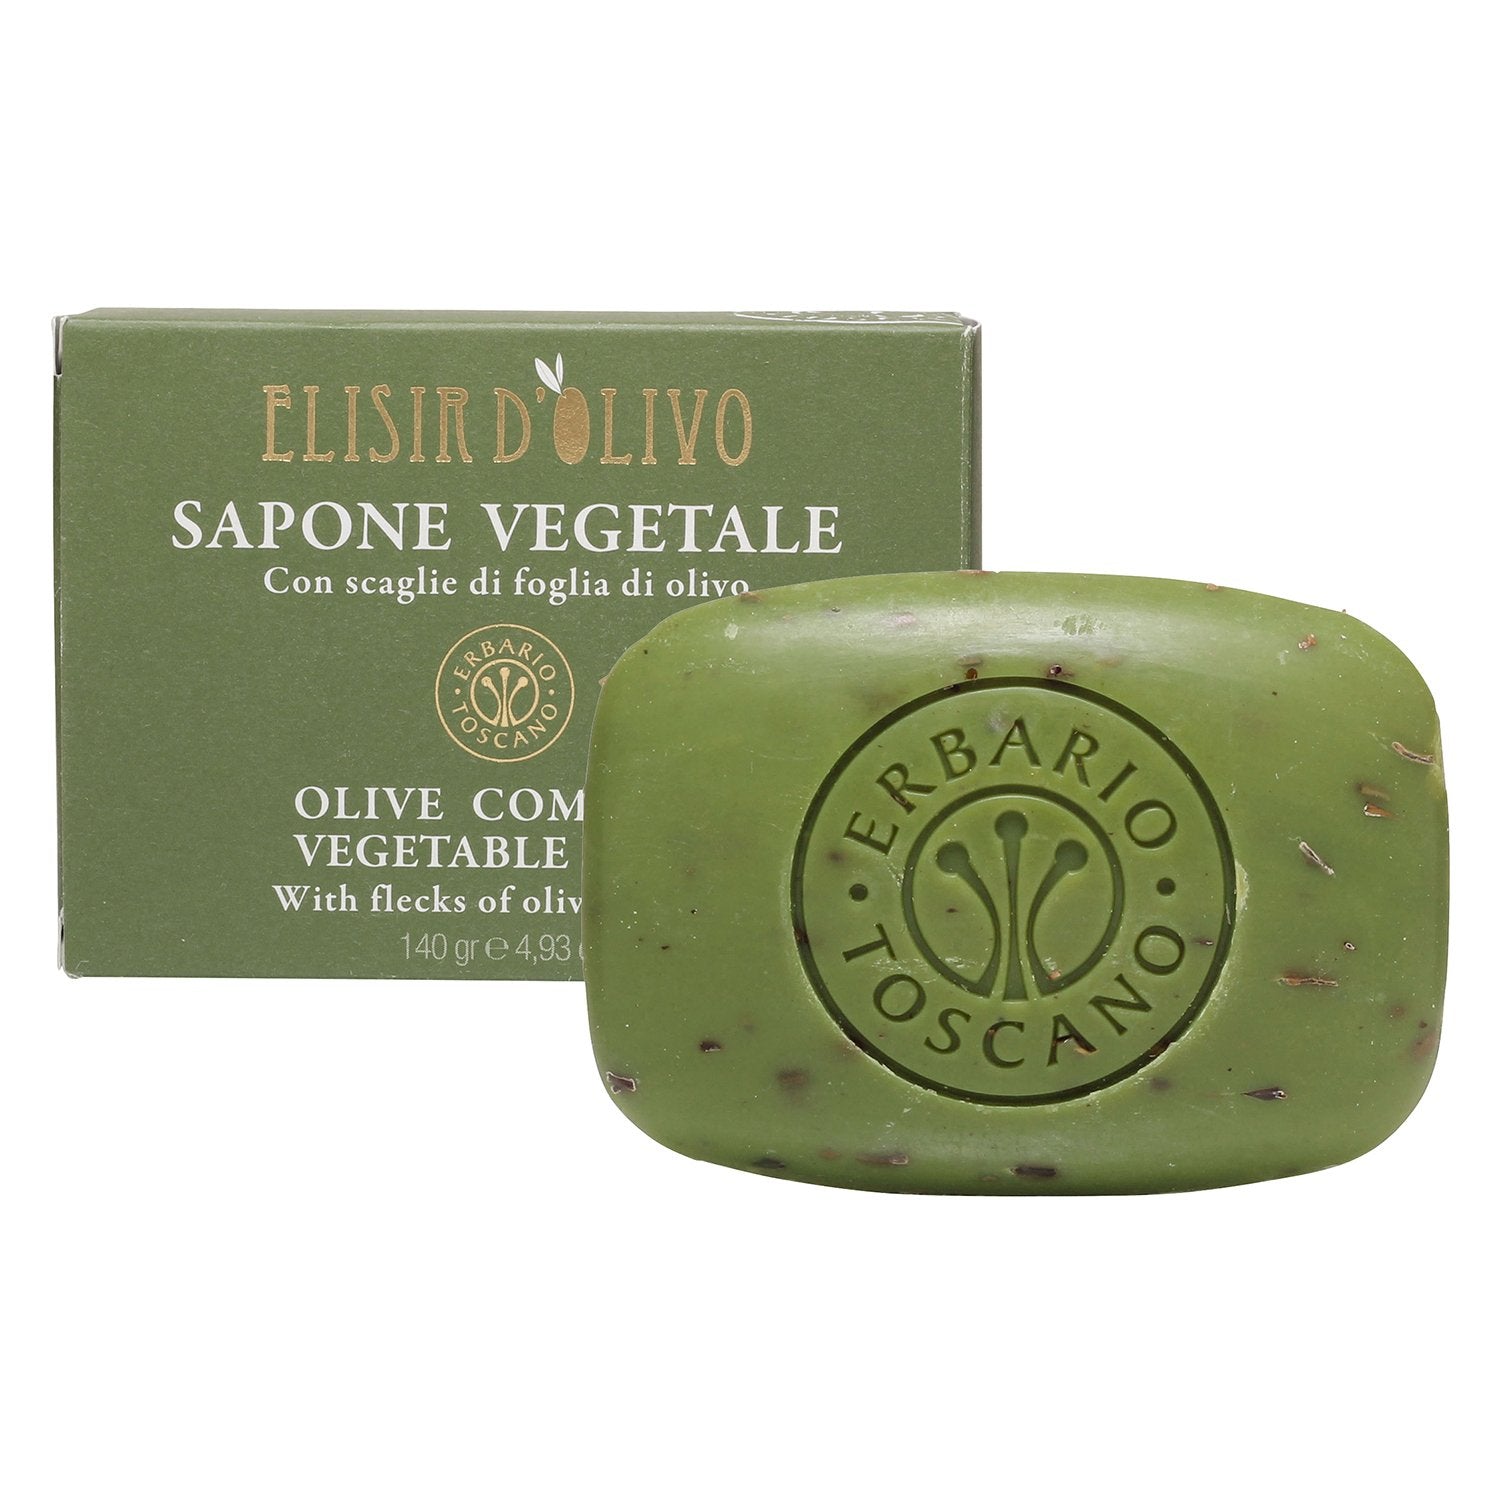 ERBARIO TOSCANO Olive Complex Soap (Olive, Leaves)